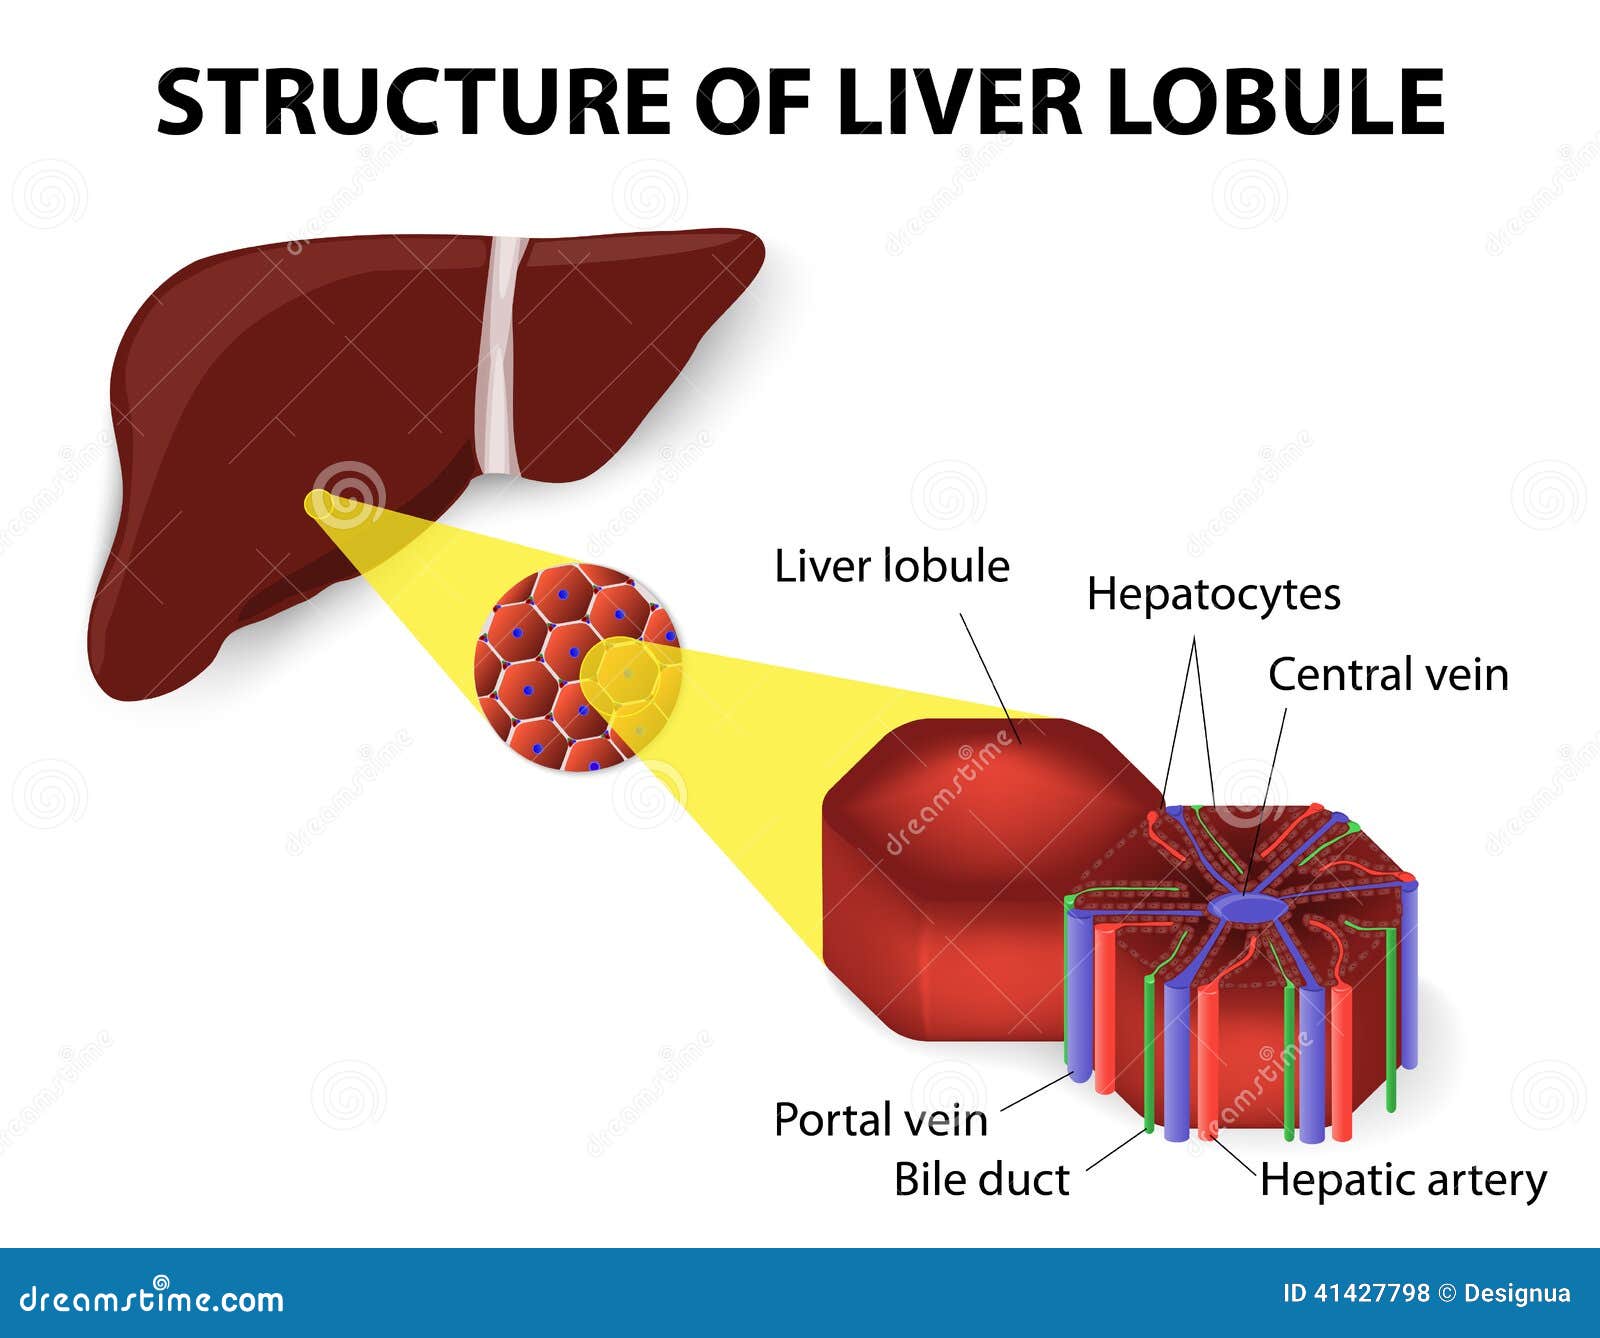 structure of liver lobule